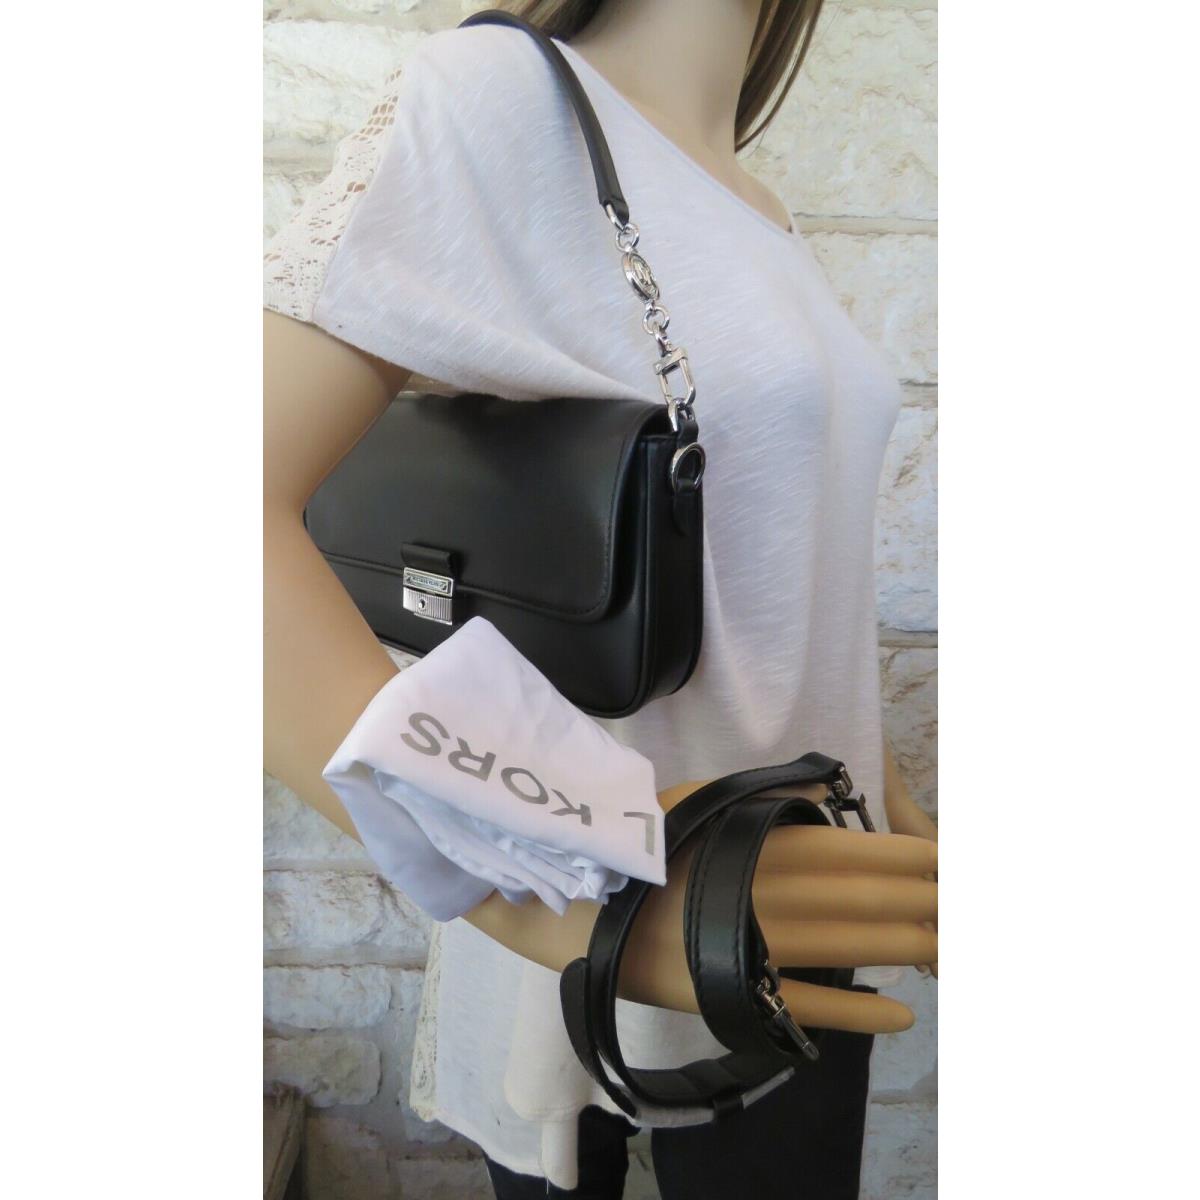 Michael Kors  bag  Bradshaw - Black , 1 Black Hand strap + 1 Black Crossbody/Shoulder Handle/Strap, Silver Hardware 1